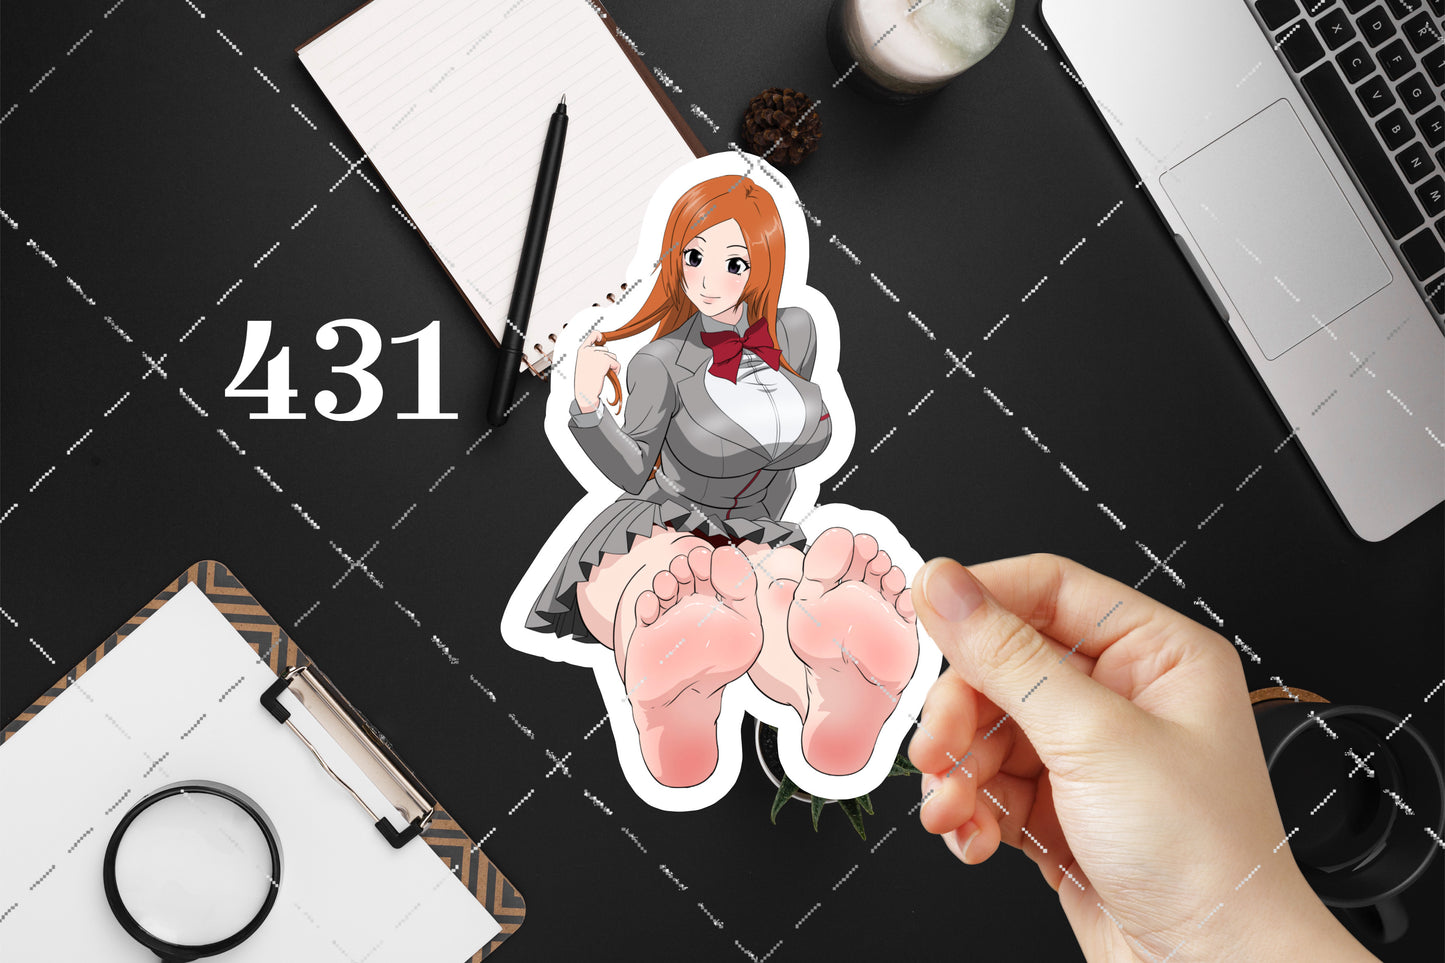 Anime vinyl sticker #431, Bleach, Inoue